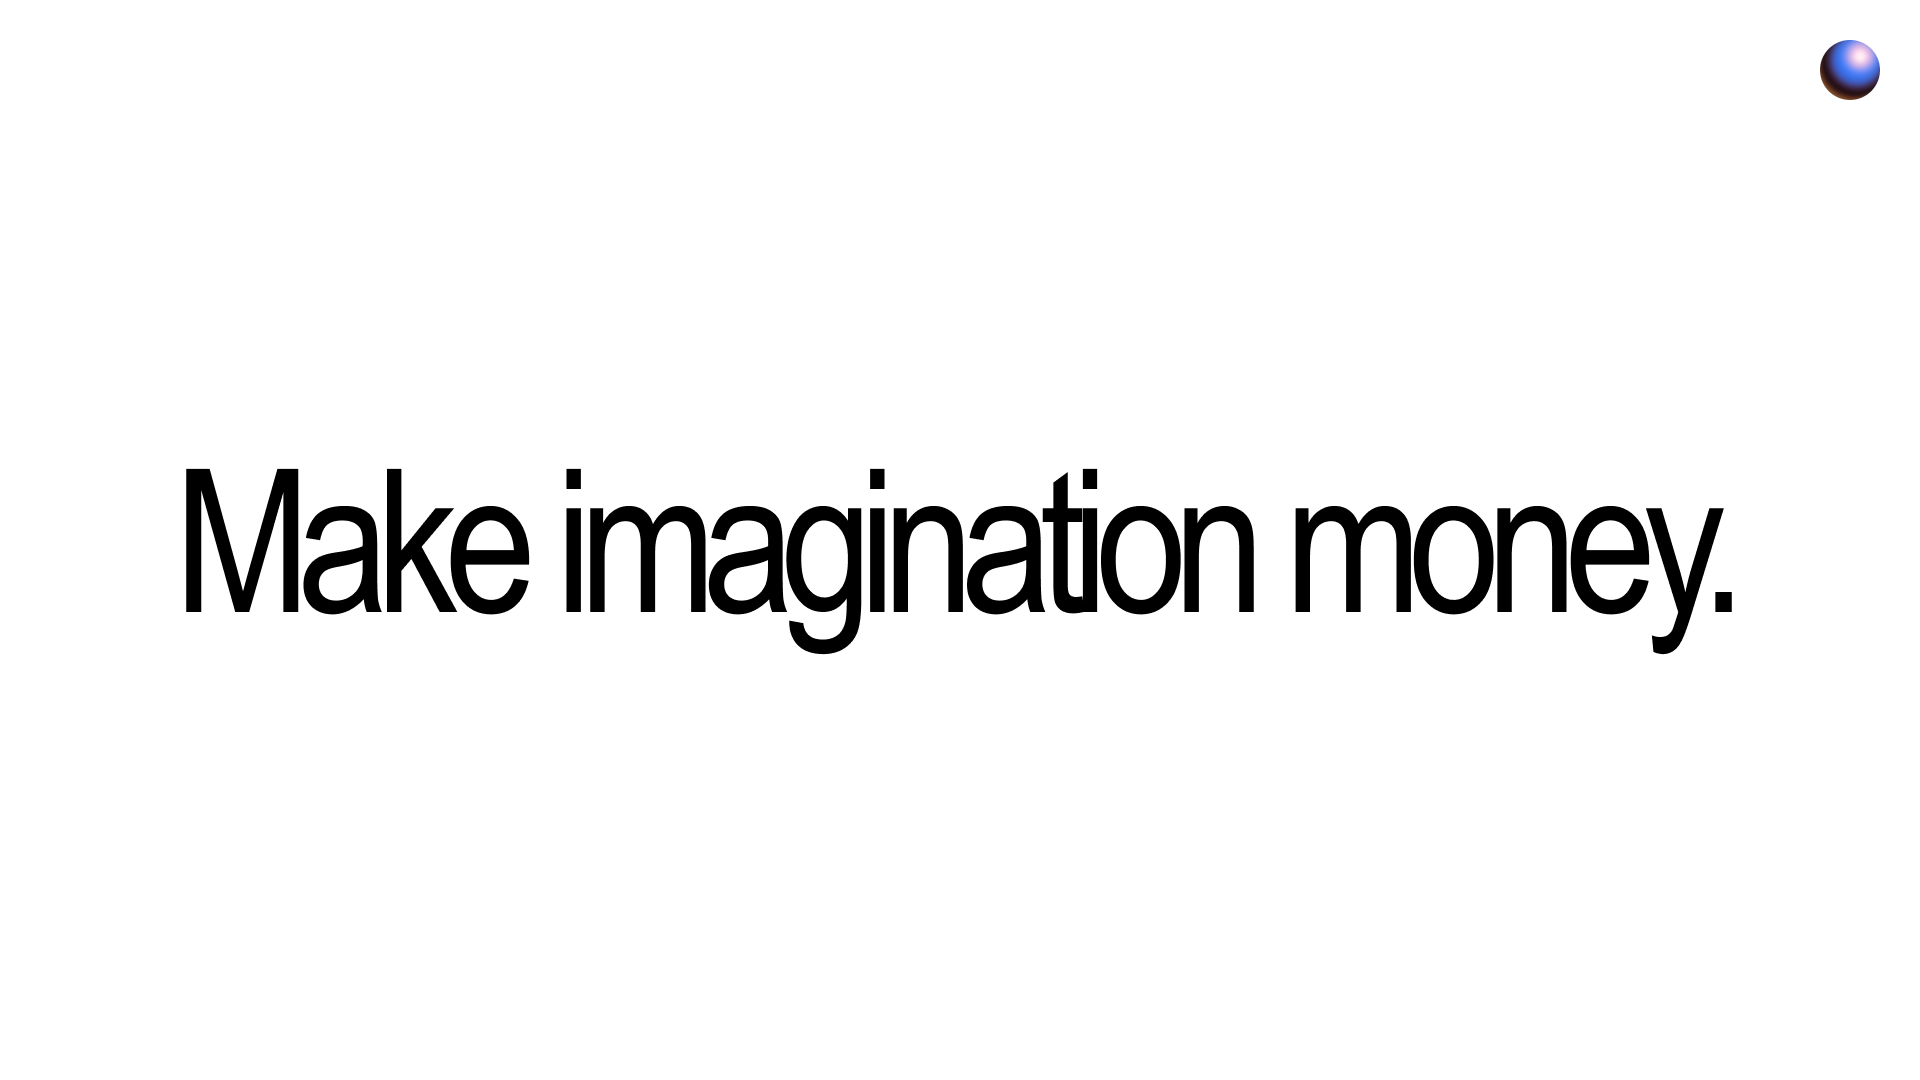 Make imagination money.